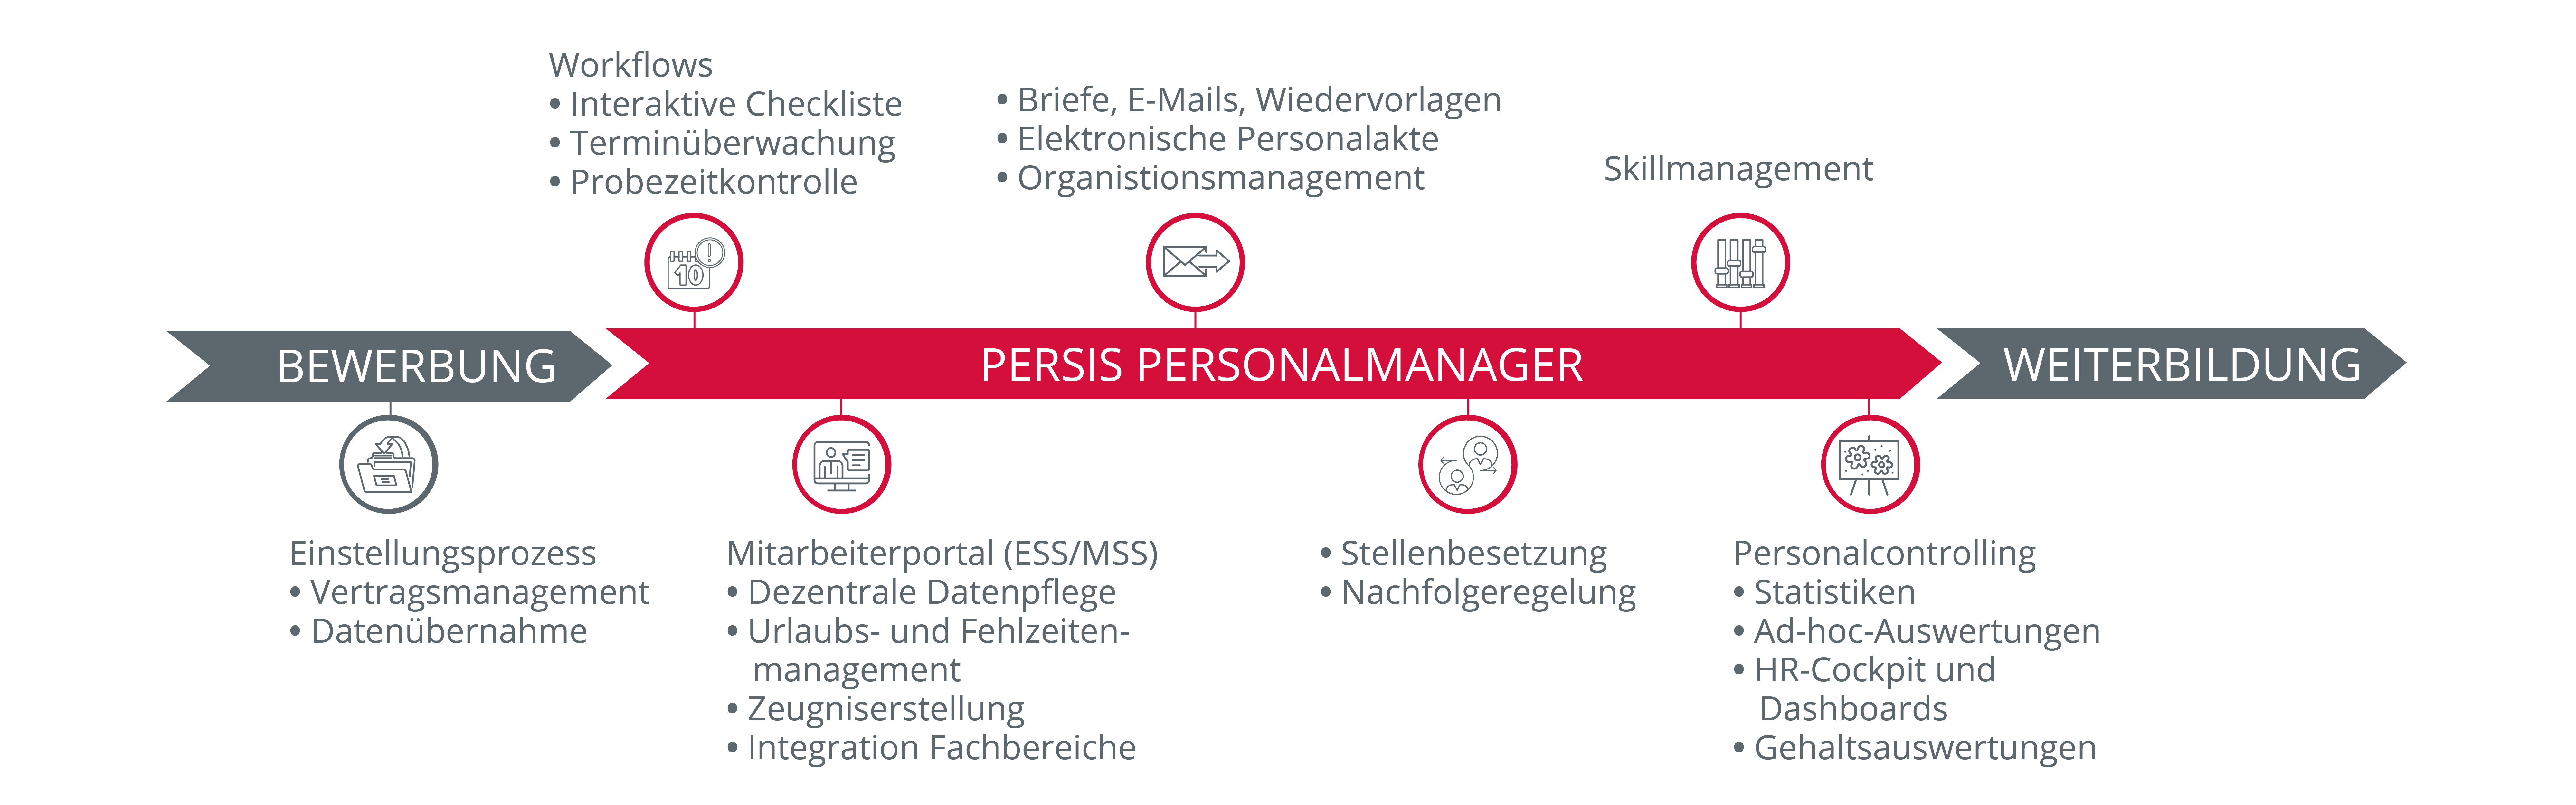 Prozessgrafik Persis Personalmanager